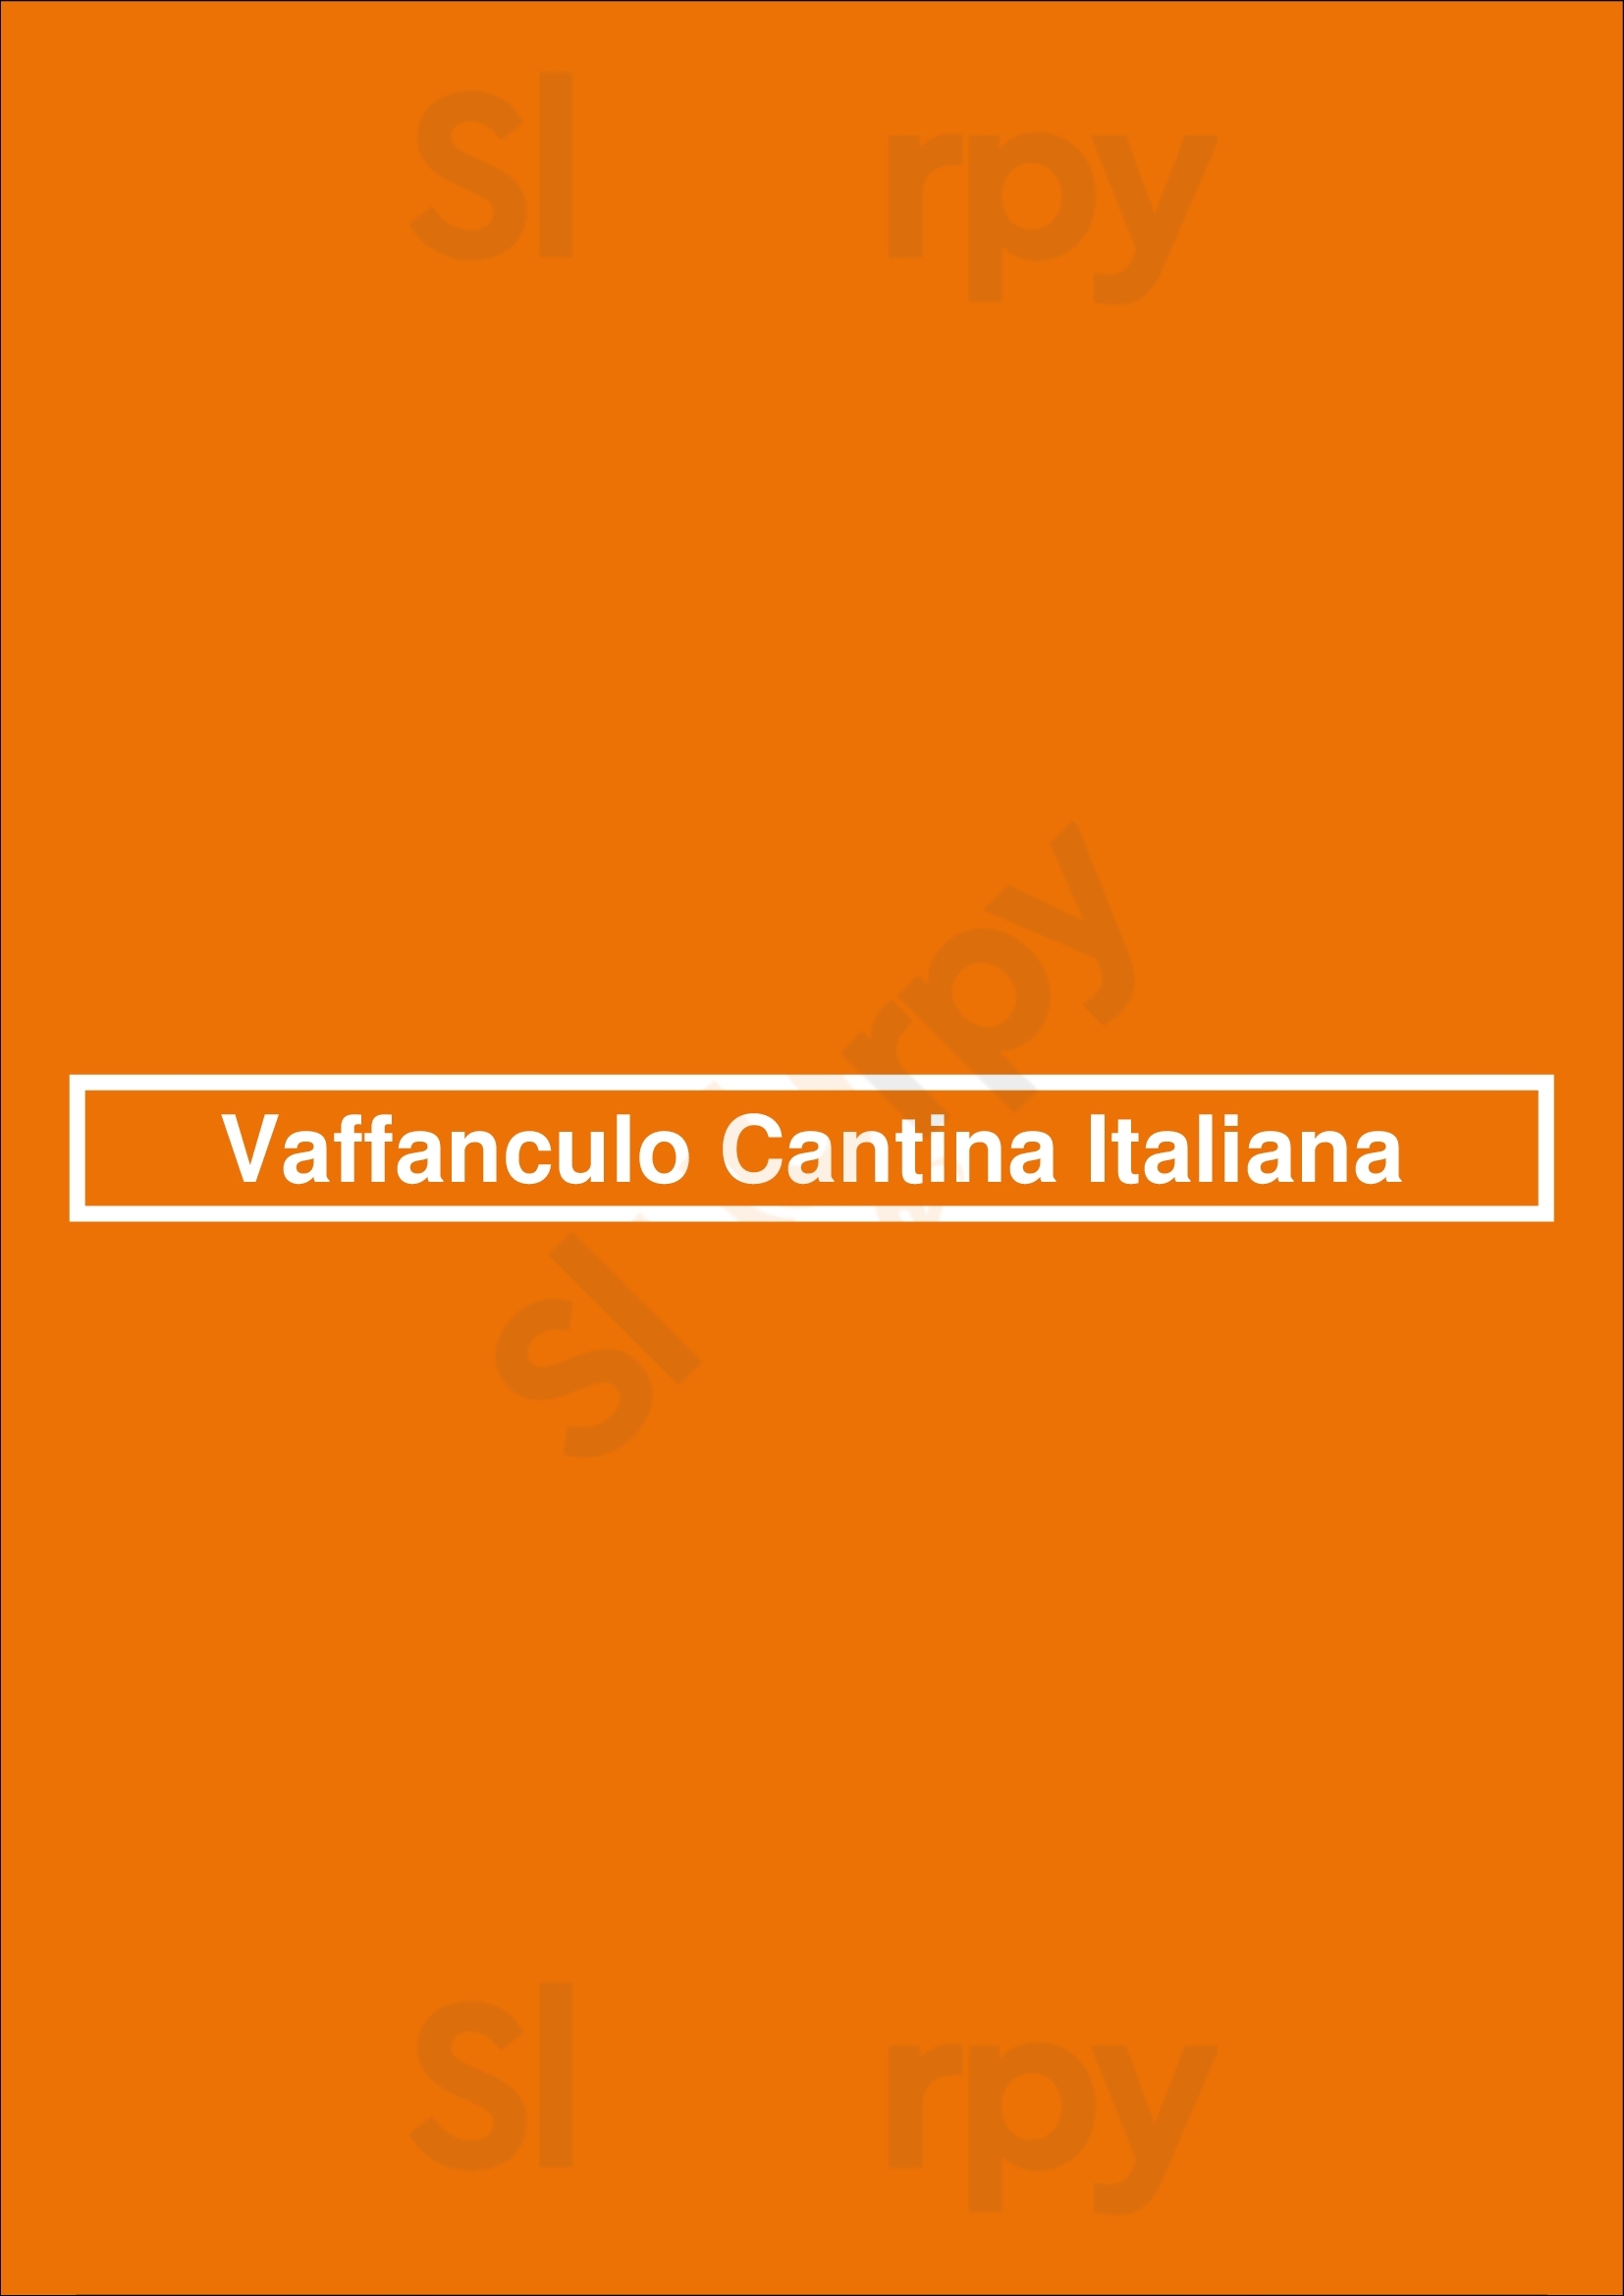 Vaffanculo Cantina Italiana Buenos Aires Menu - 1